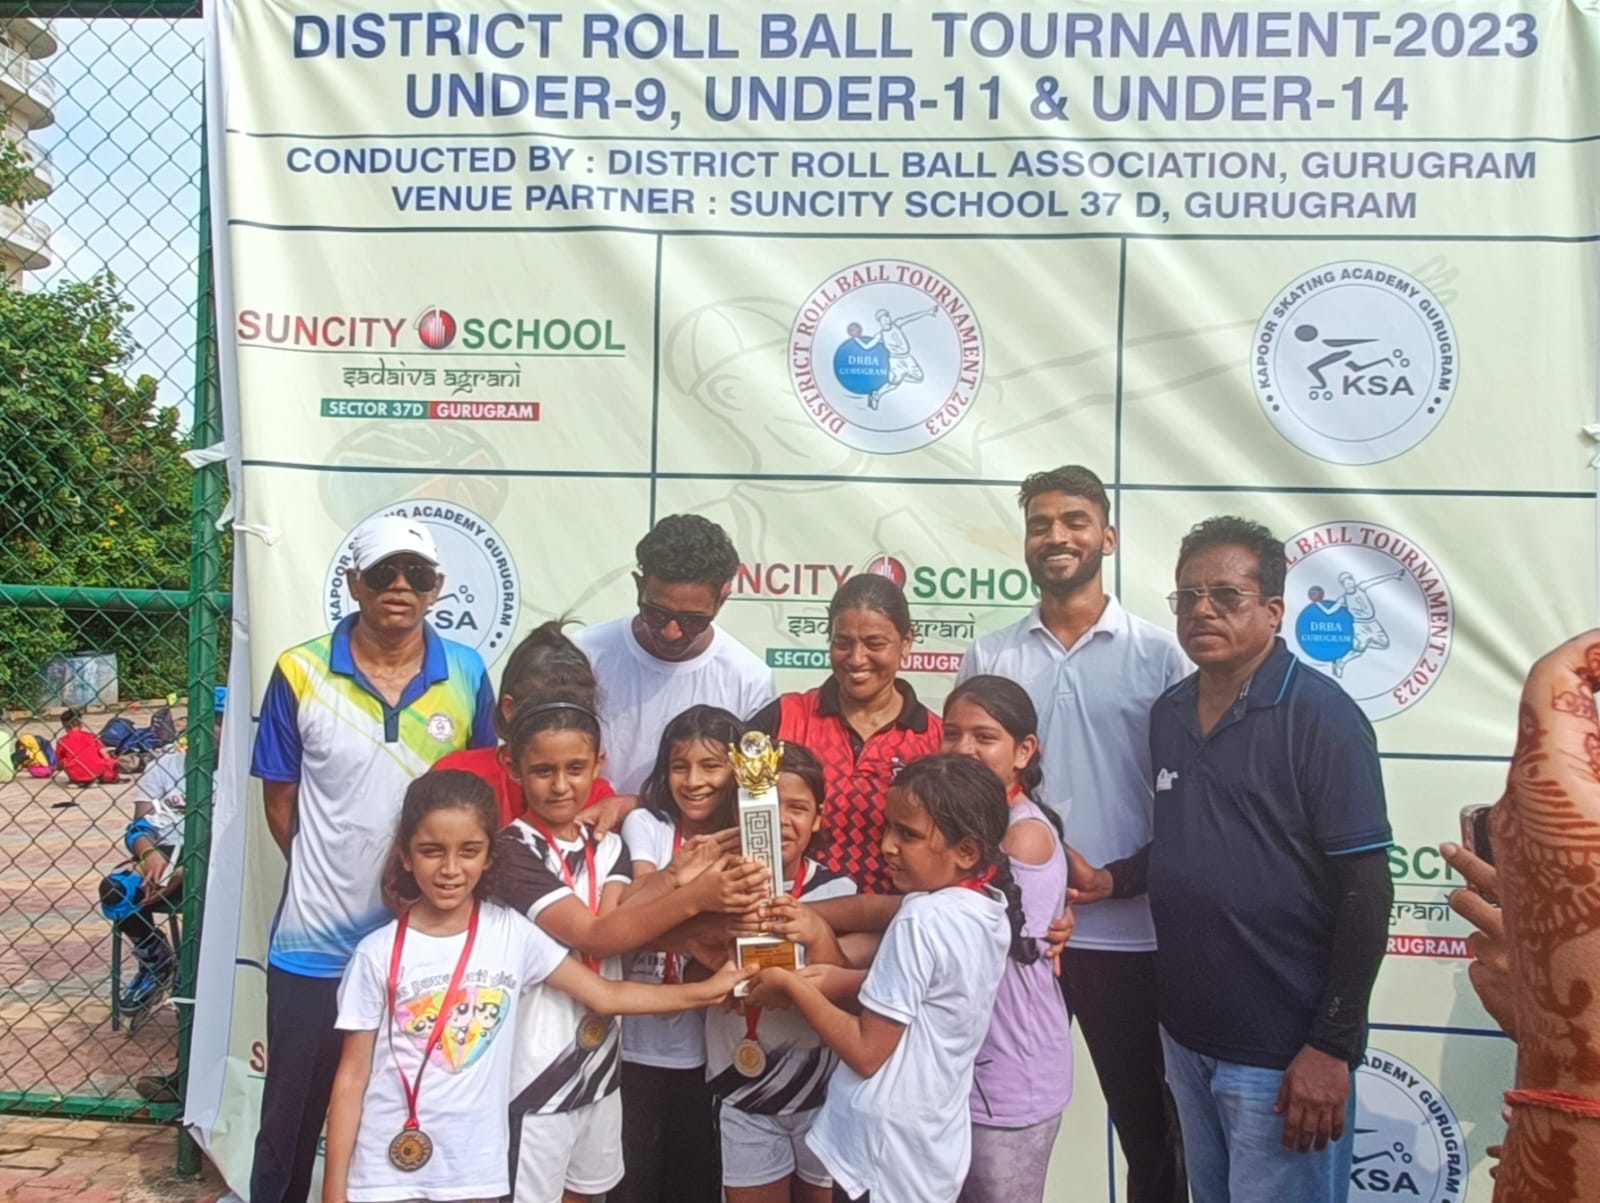 District Roll Ball Tournament-2023